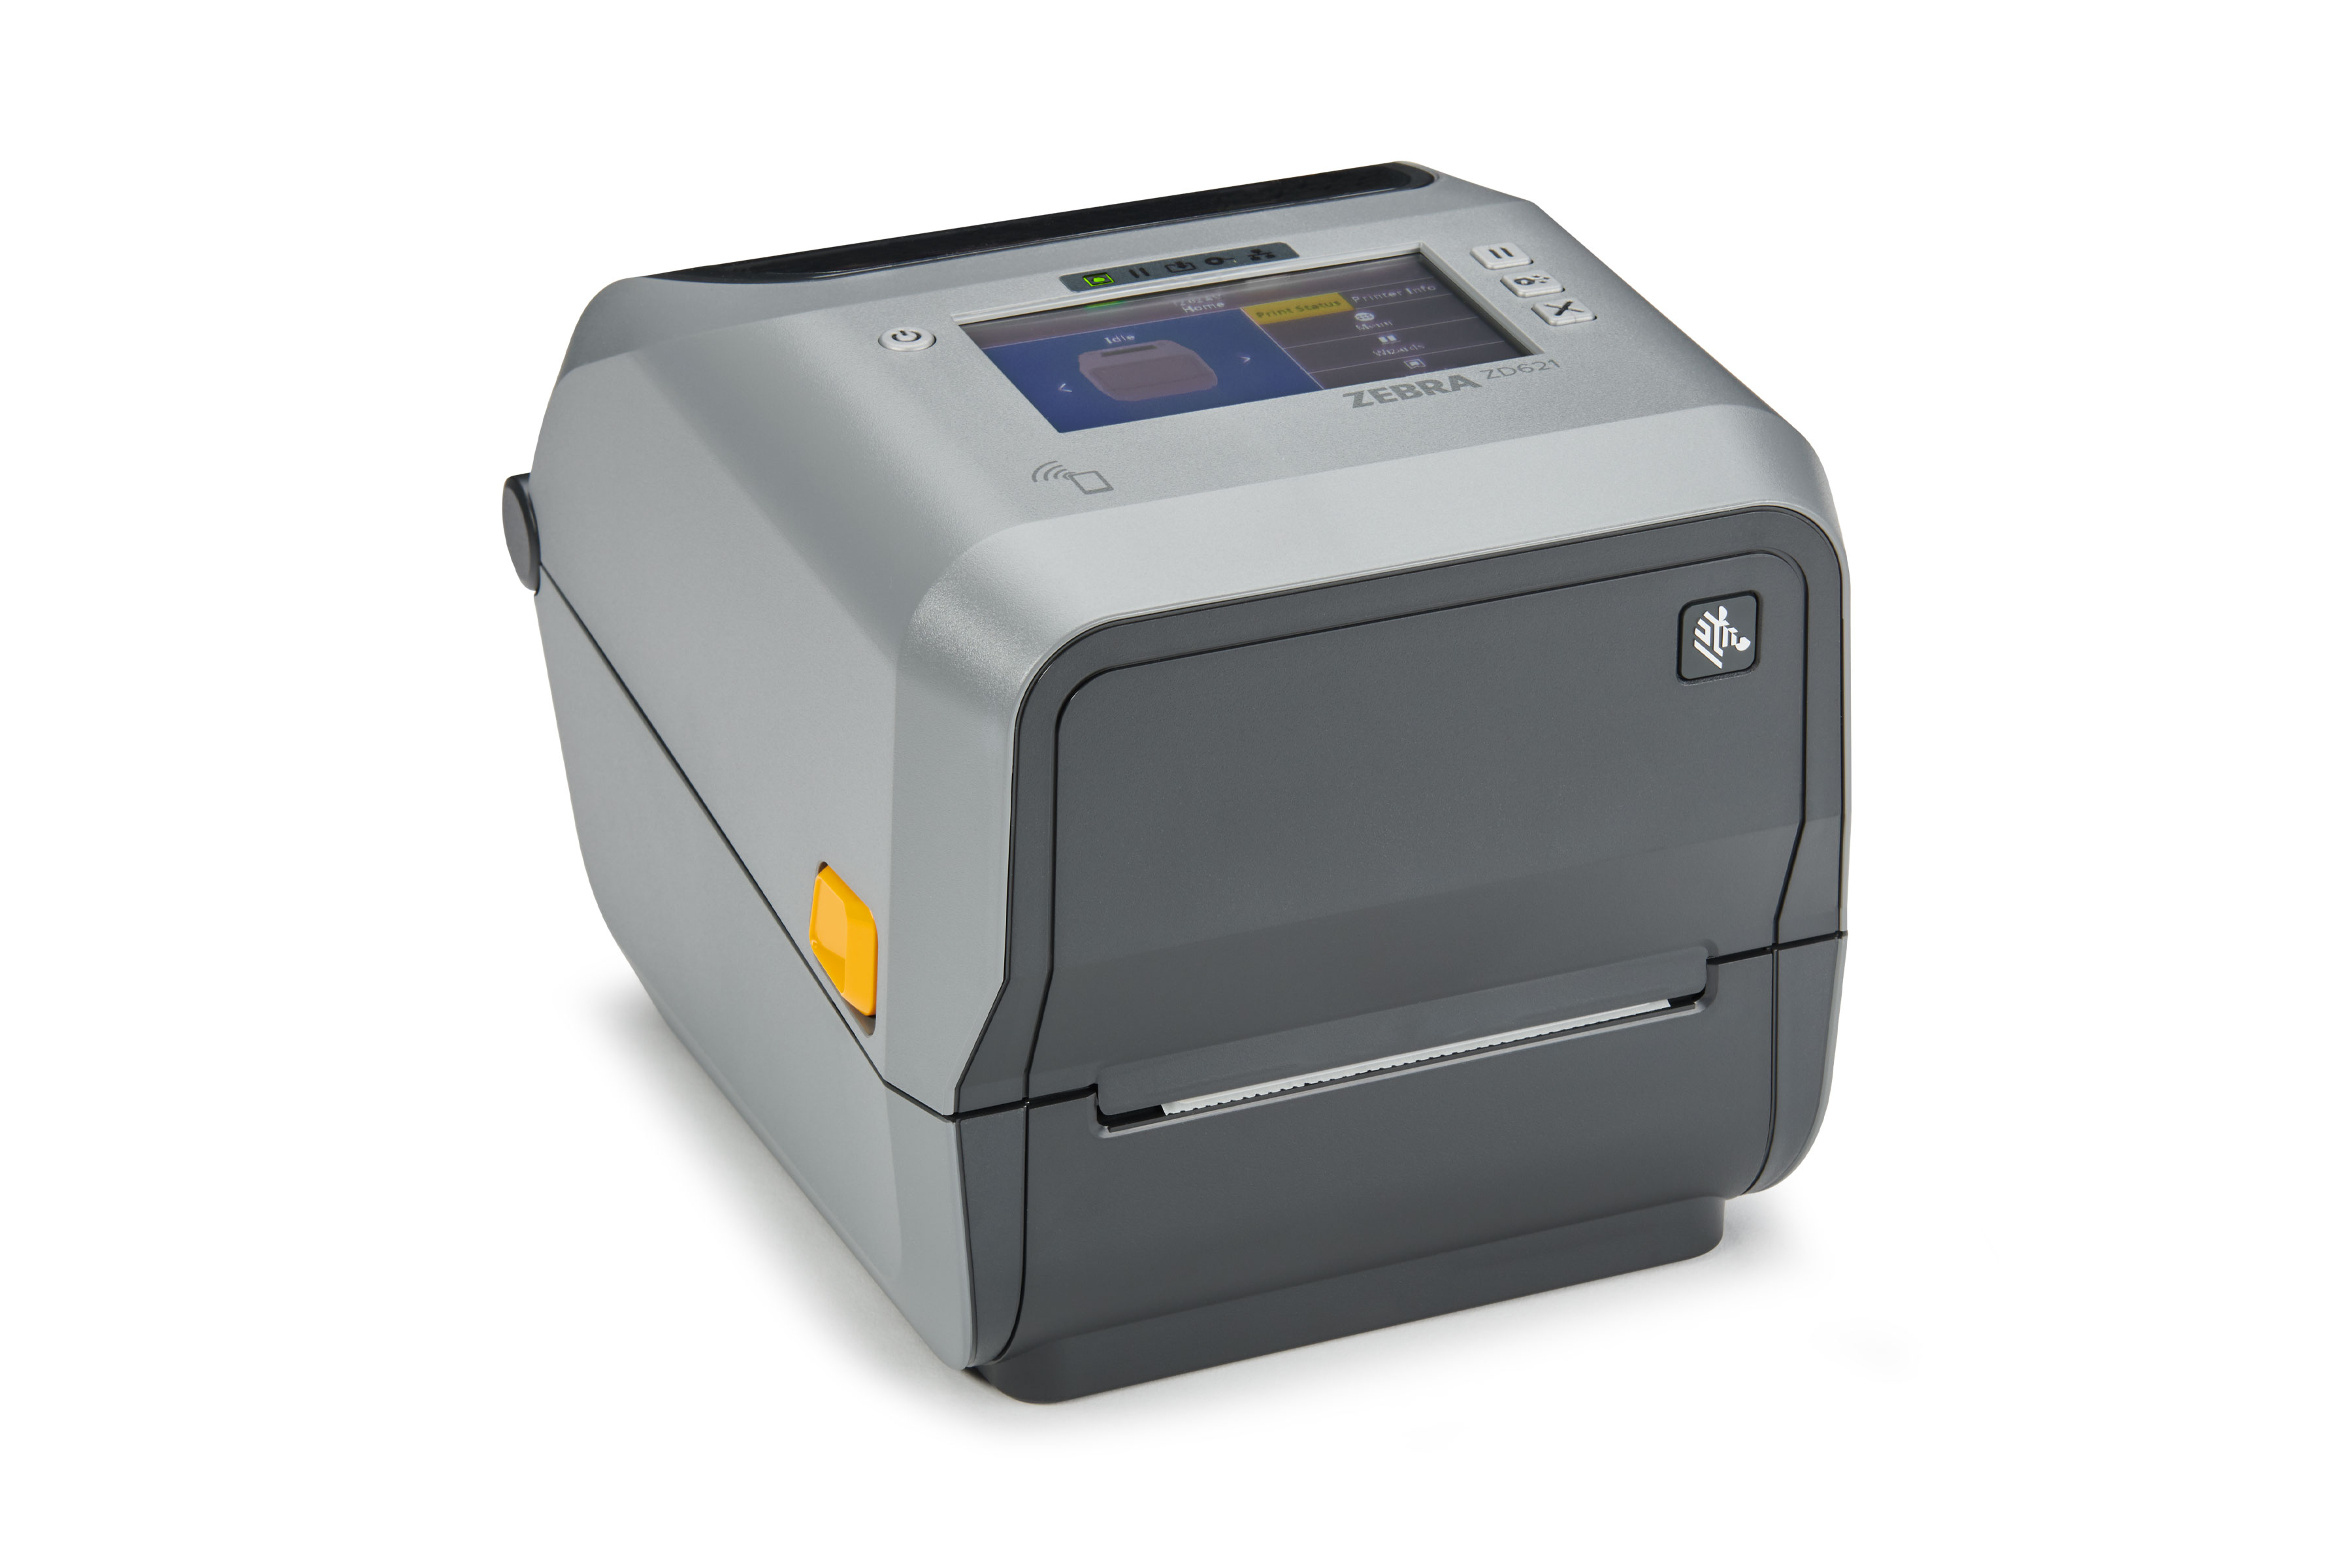 ZD600 Series Desktop Printers